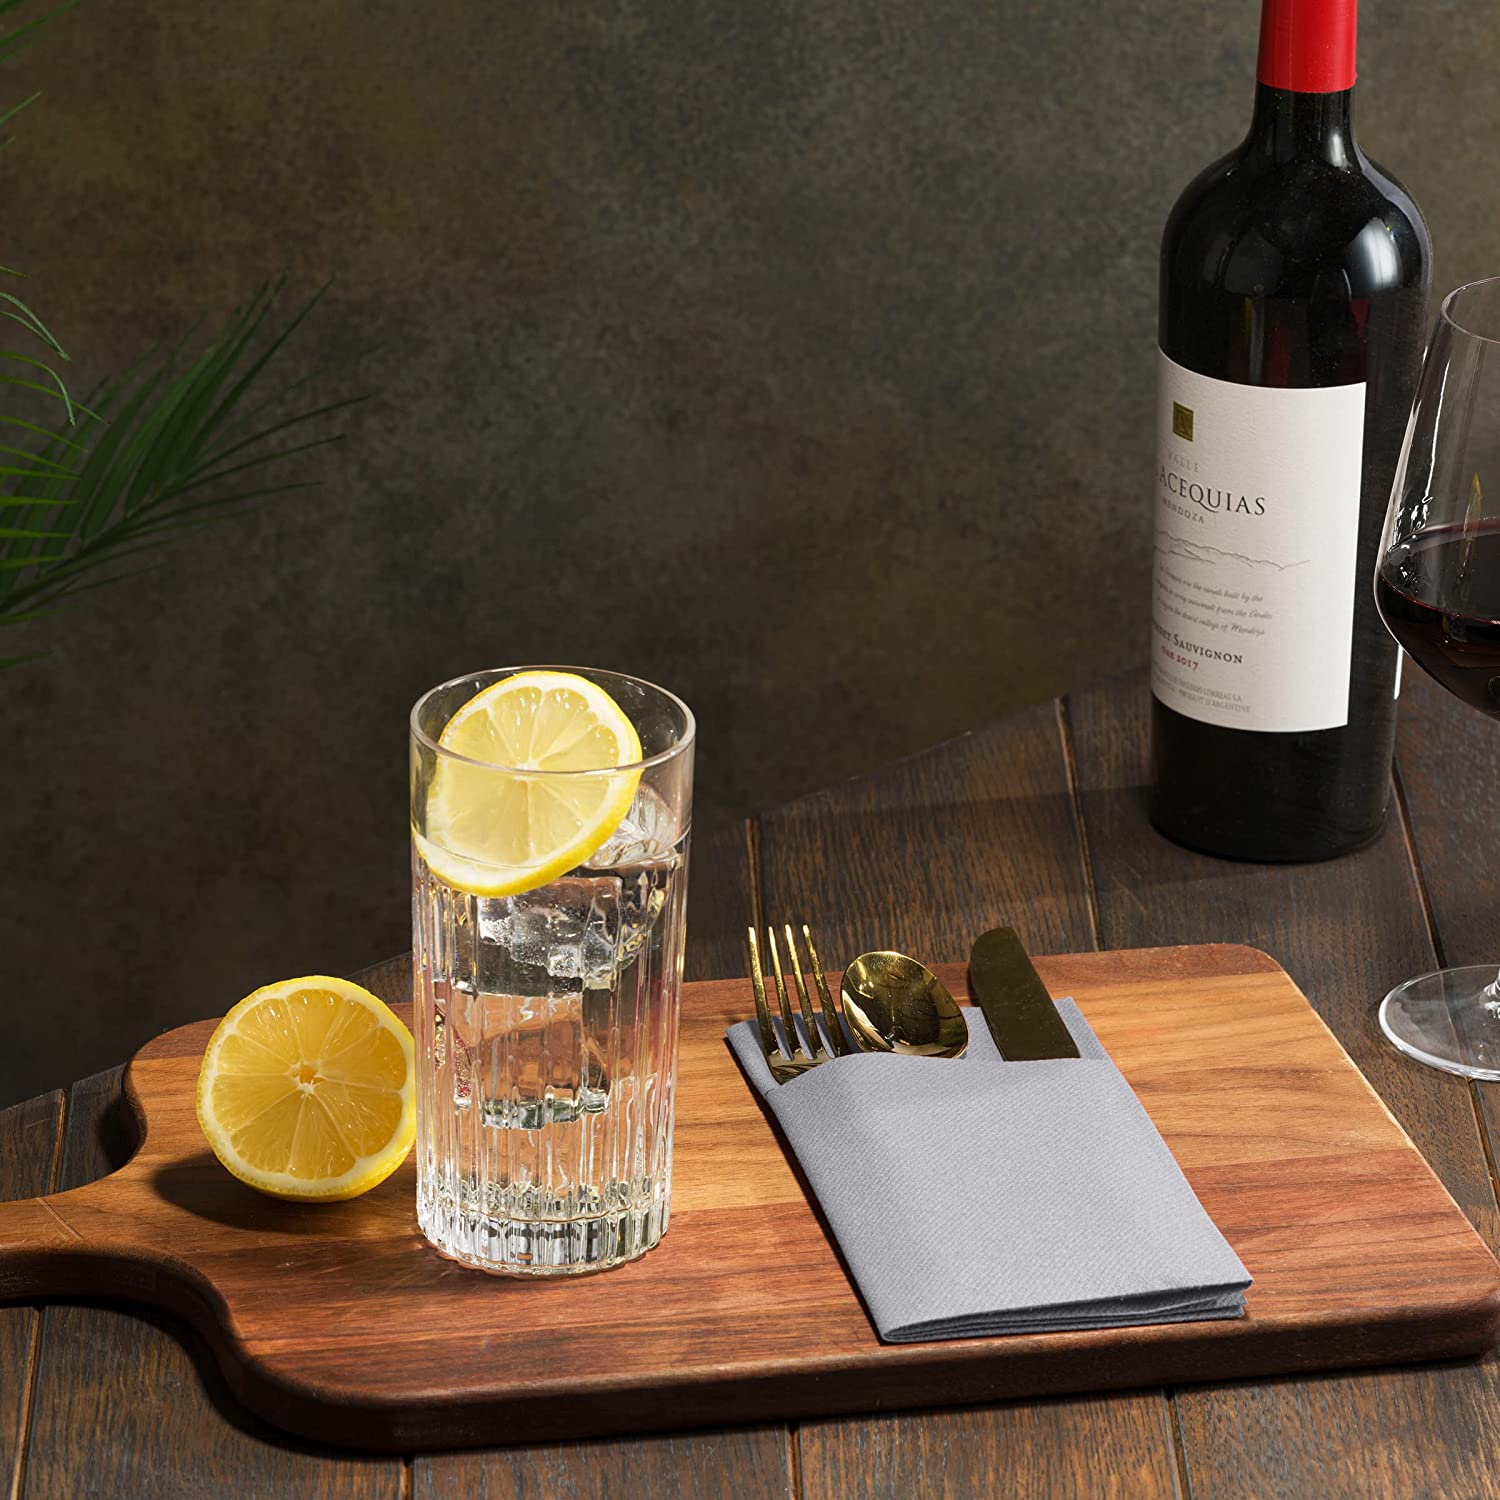 Disposable Linen-Feel Dinner Napkins with Built-in Flatware Pocket